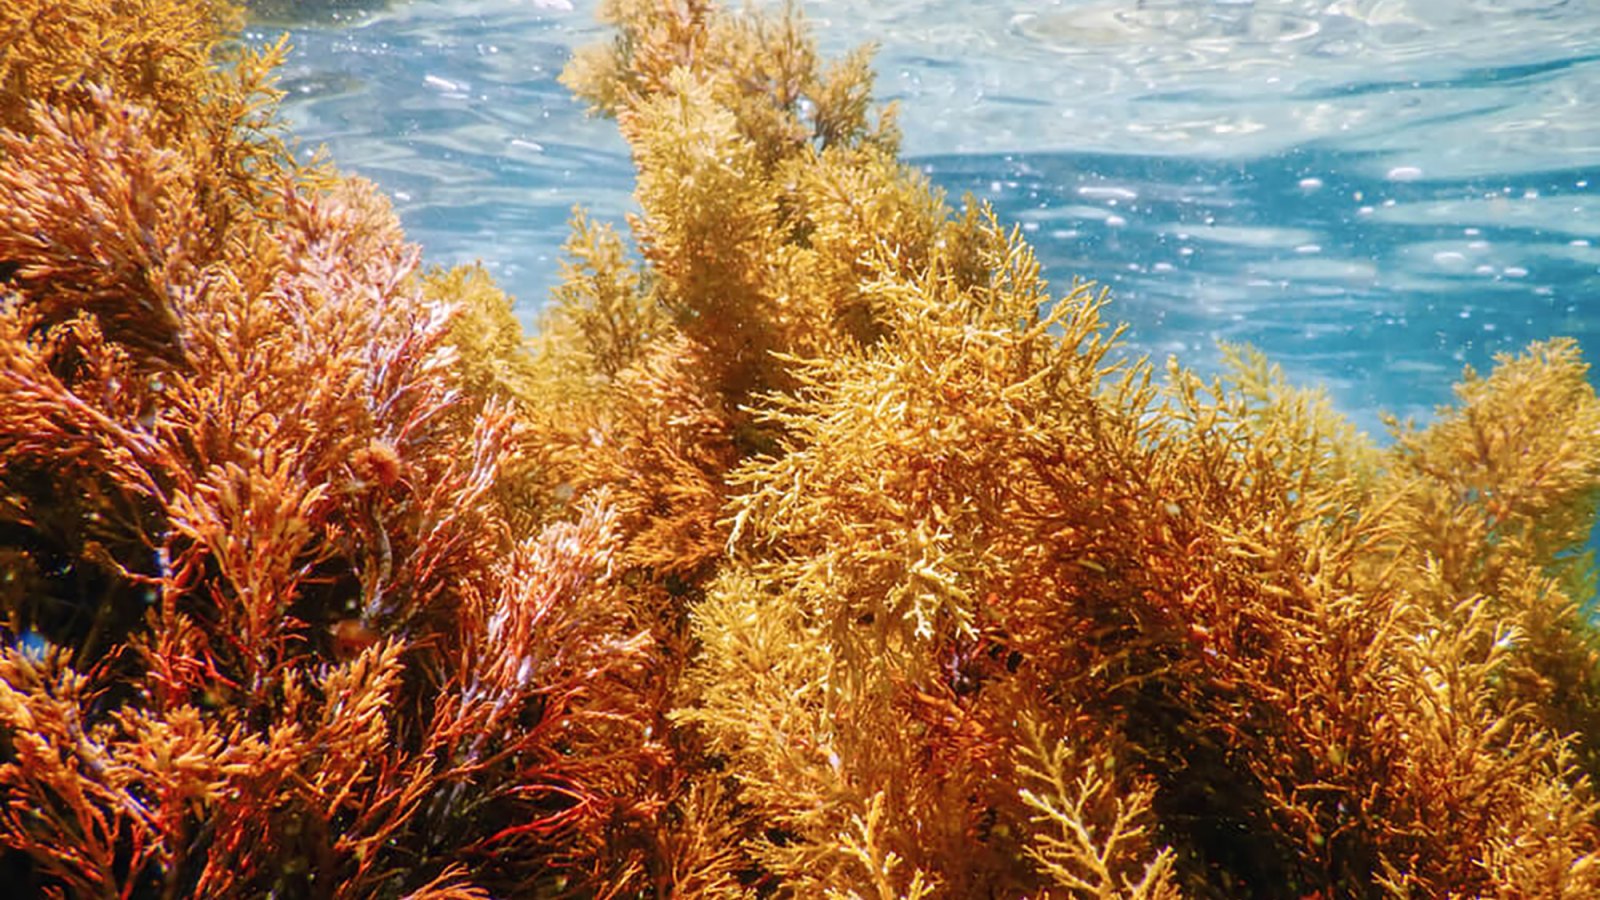 Sea Moss Benefits